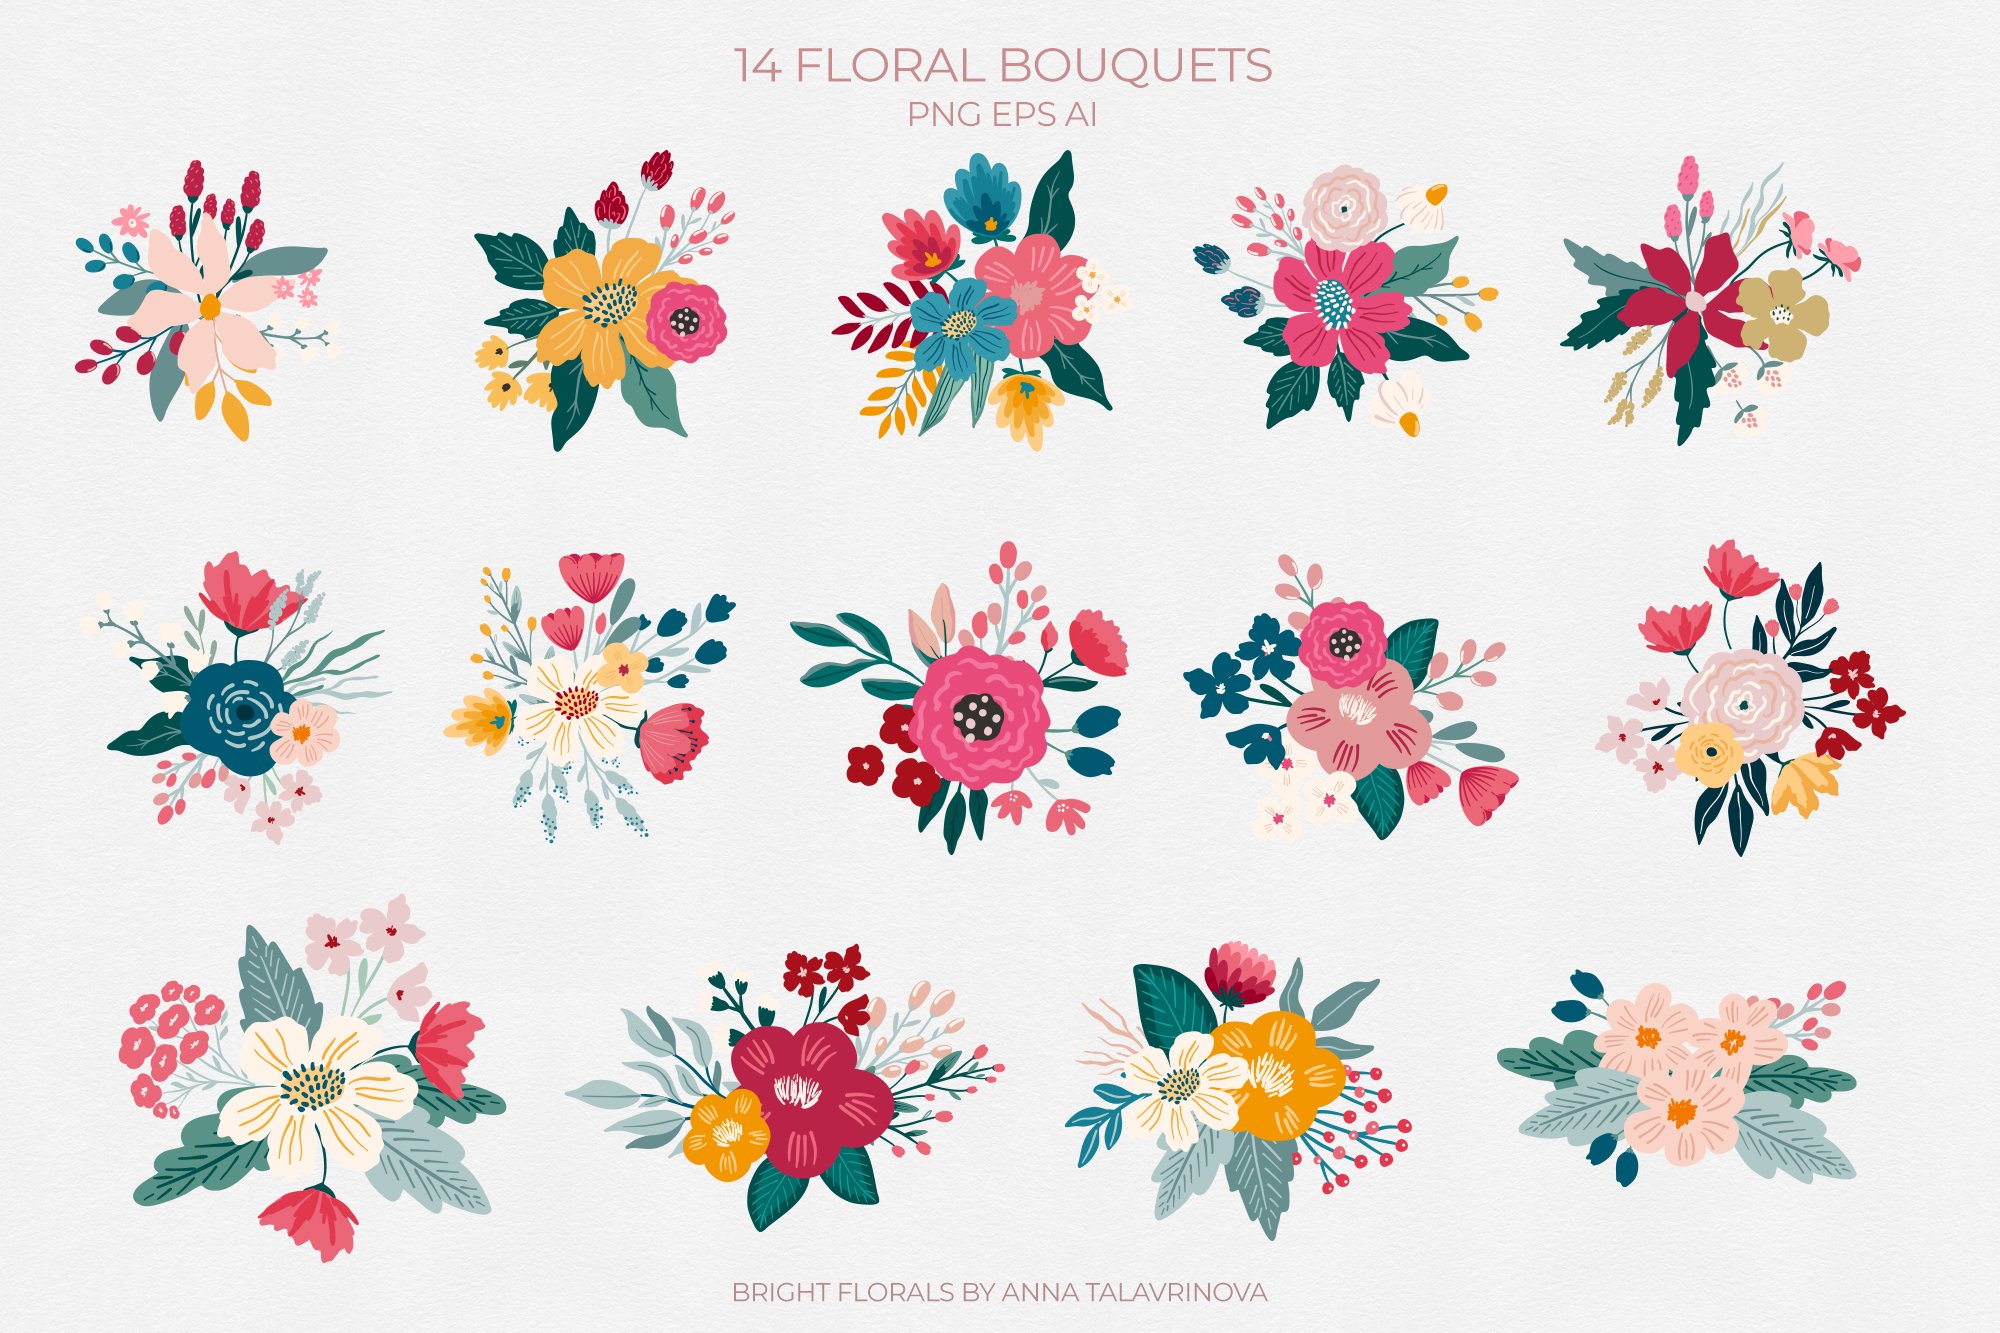 Bright Florals, Flowers & Patterns - Design Cuts